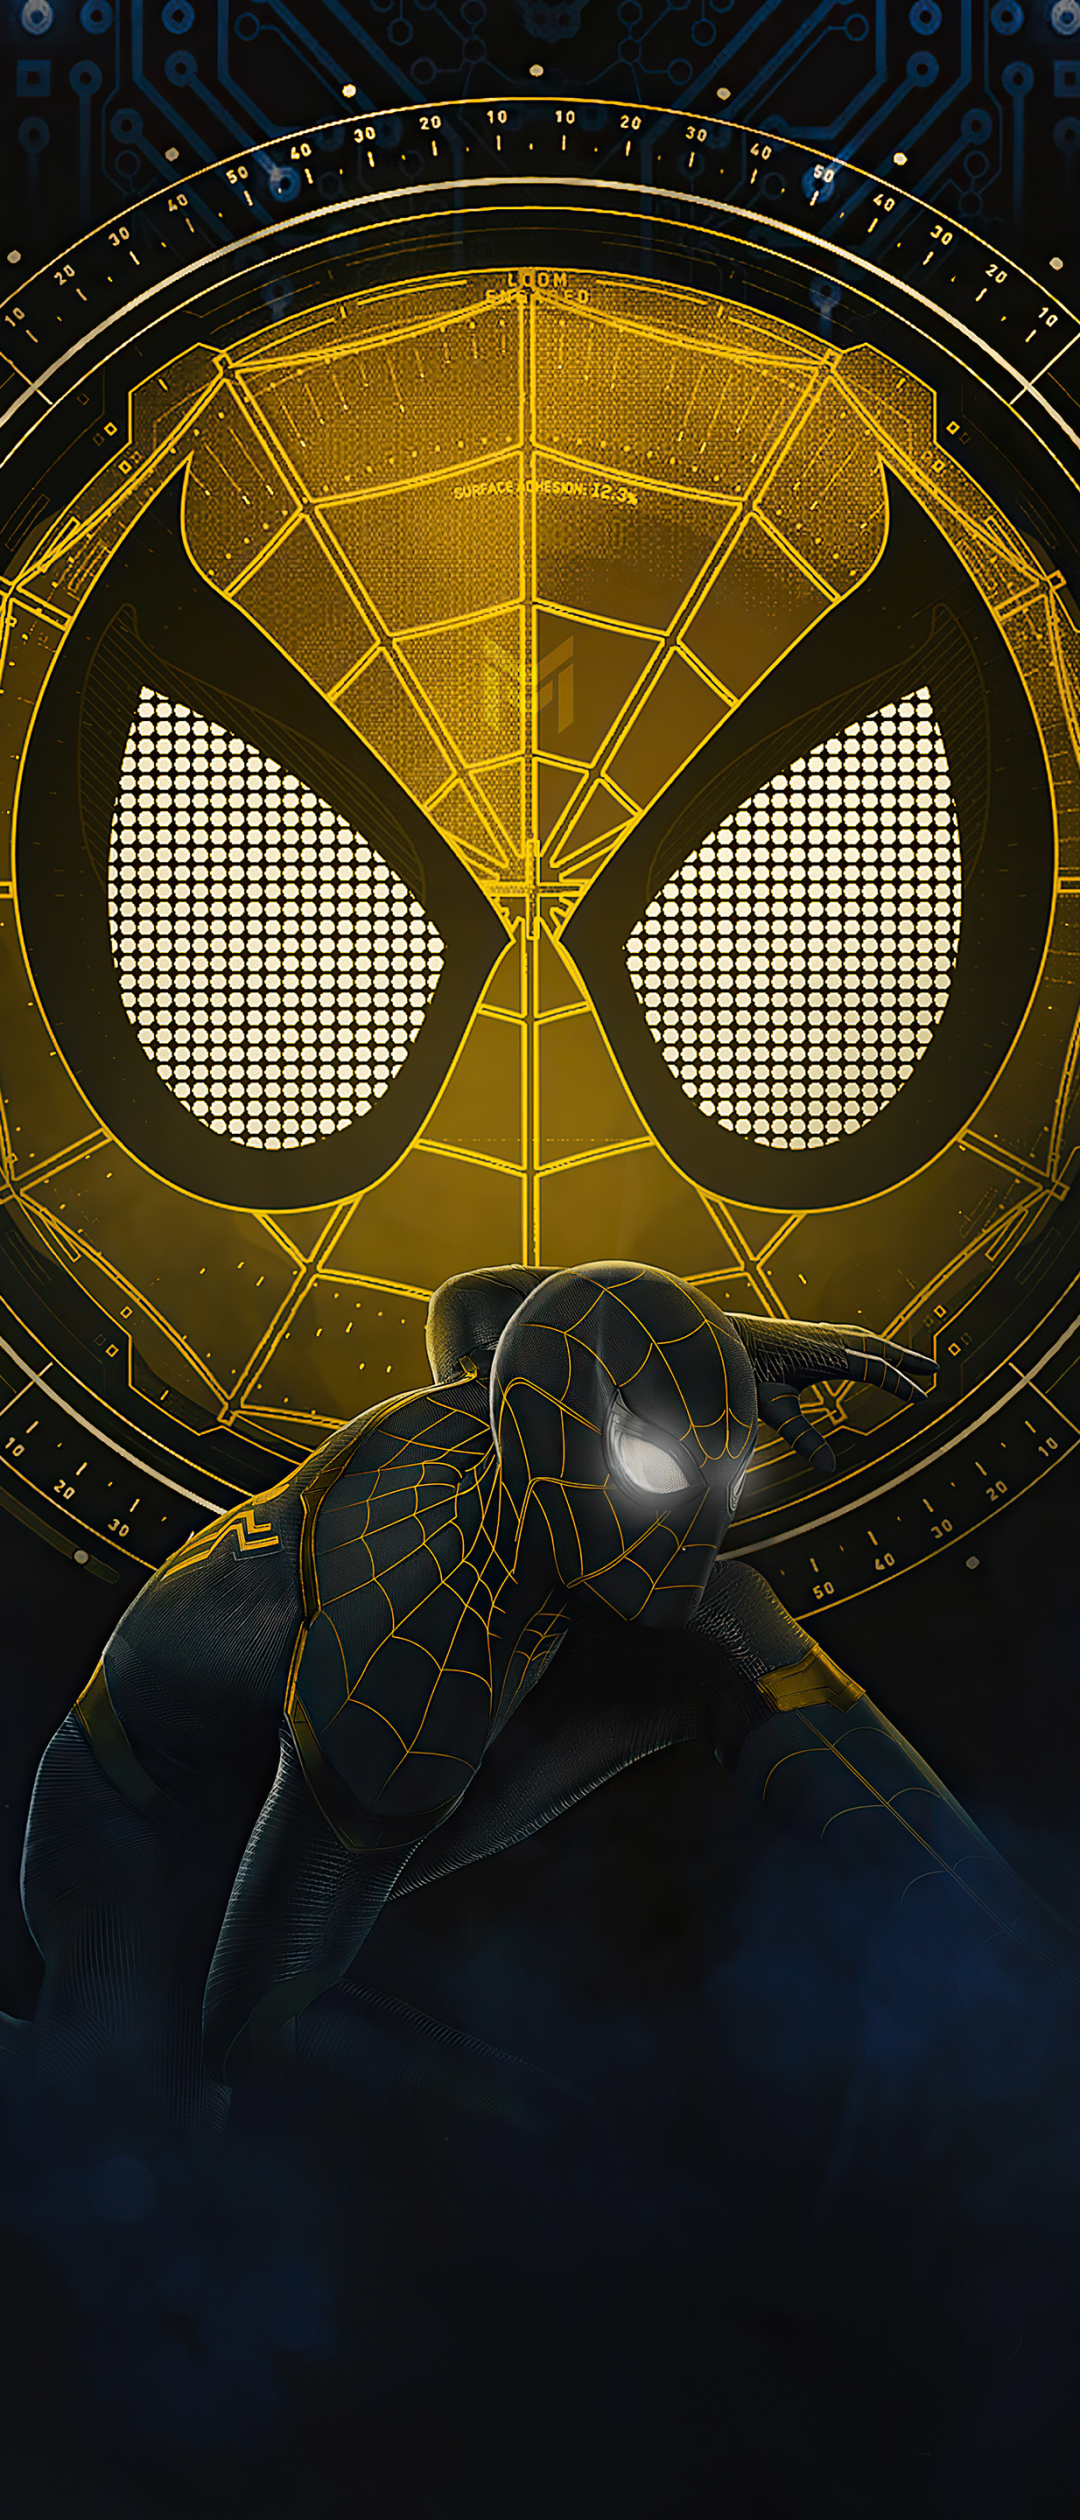 Descarga gratuita de fondo de pantalla para móvil de Películas, Superhéroe, Hombre Araña, Spider Man, Spider Man: Sin Camino A Casa.